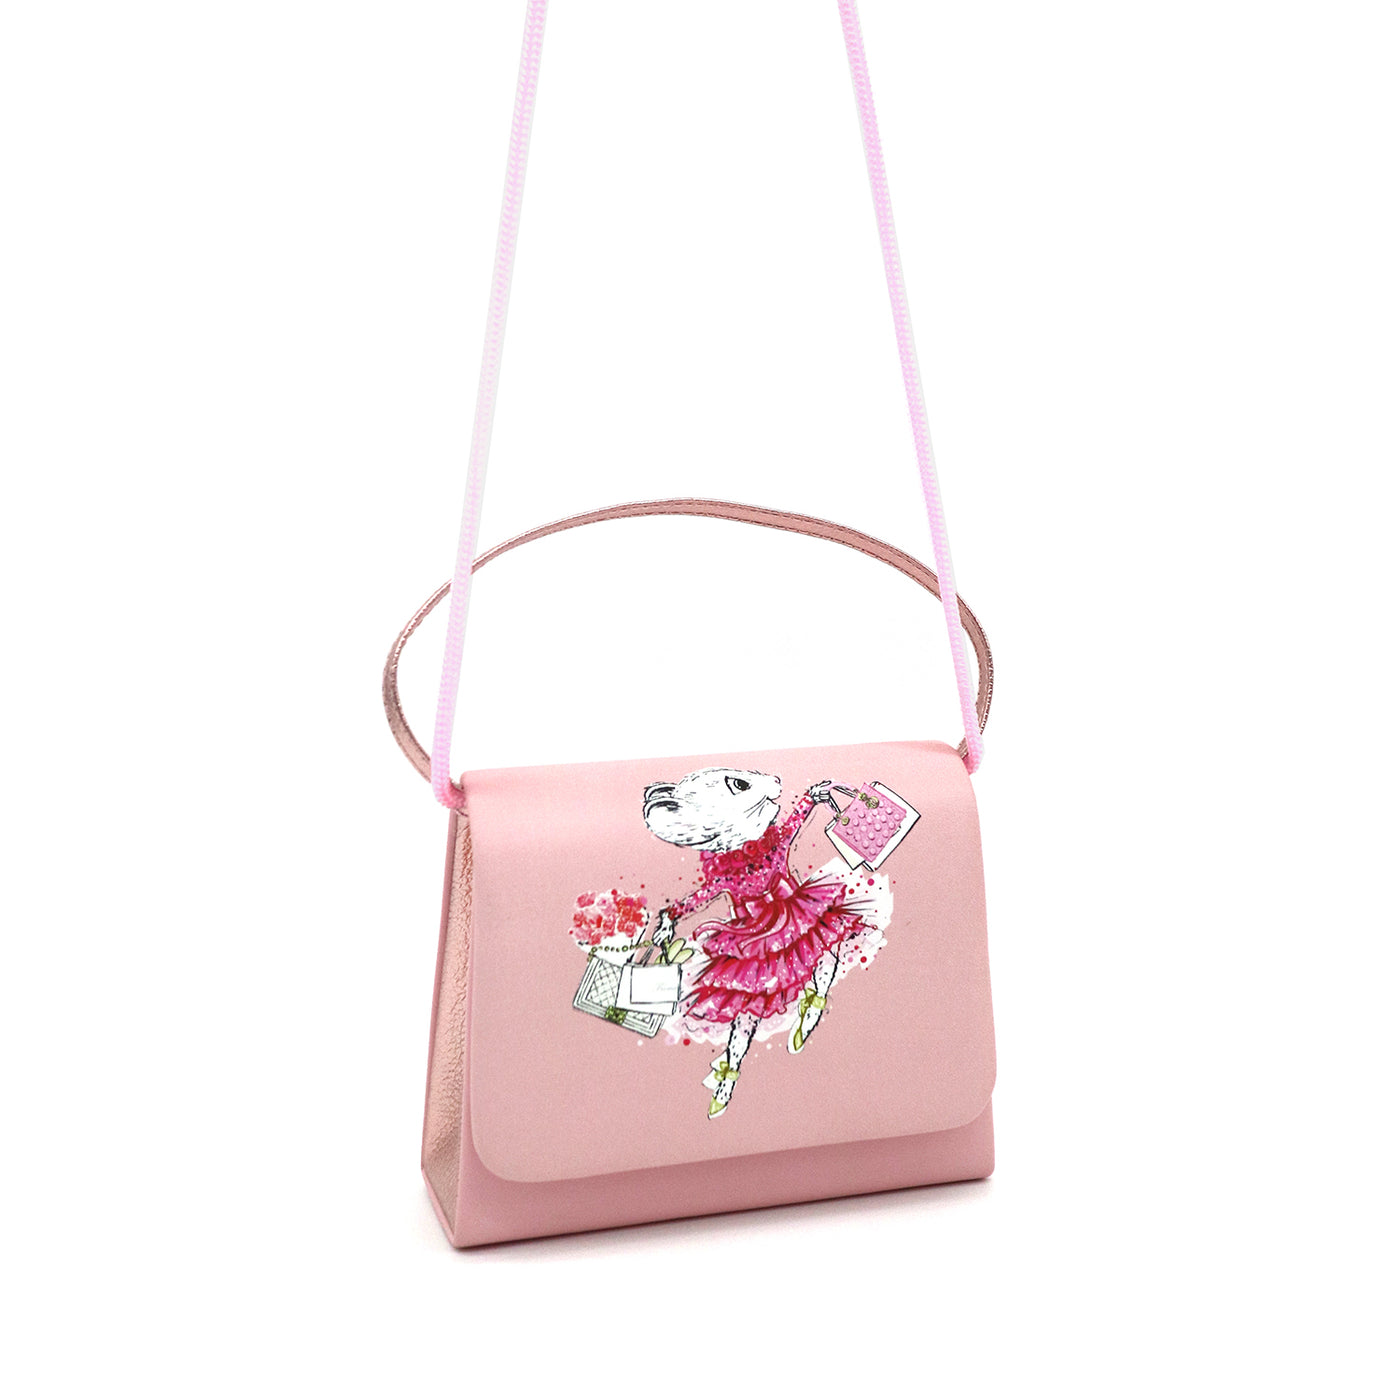 Fashion Mini Handbag in Pink